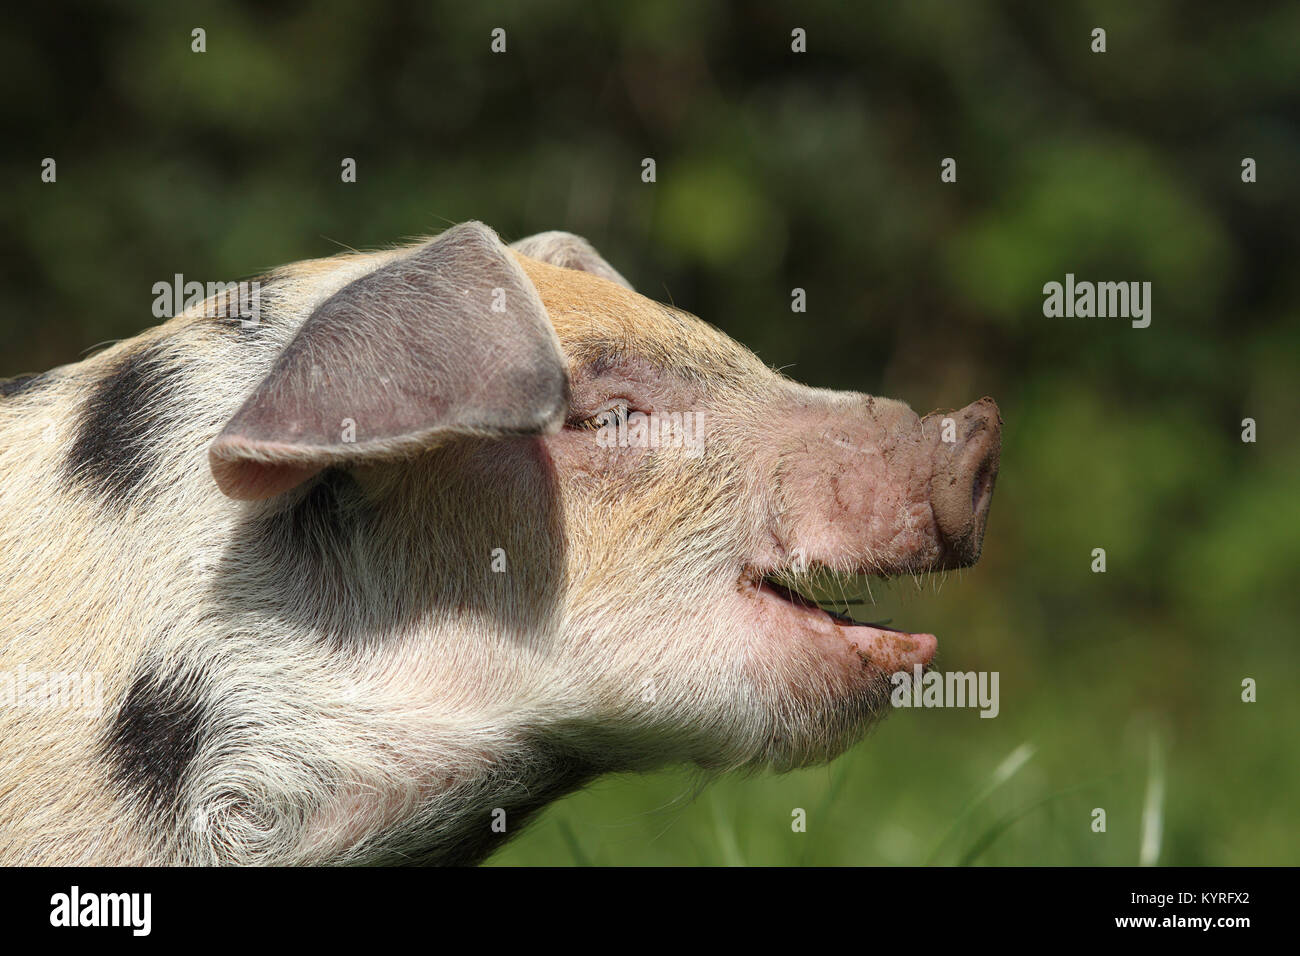 Domestic Pig, Turopolje x ?. Portrait of a piglet (3 weeks old). Germany Stock Photo